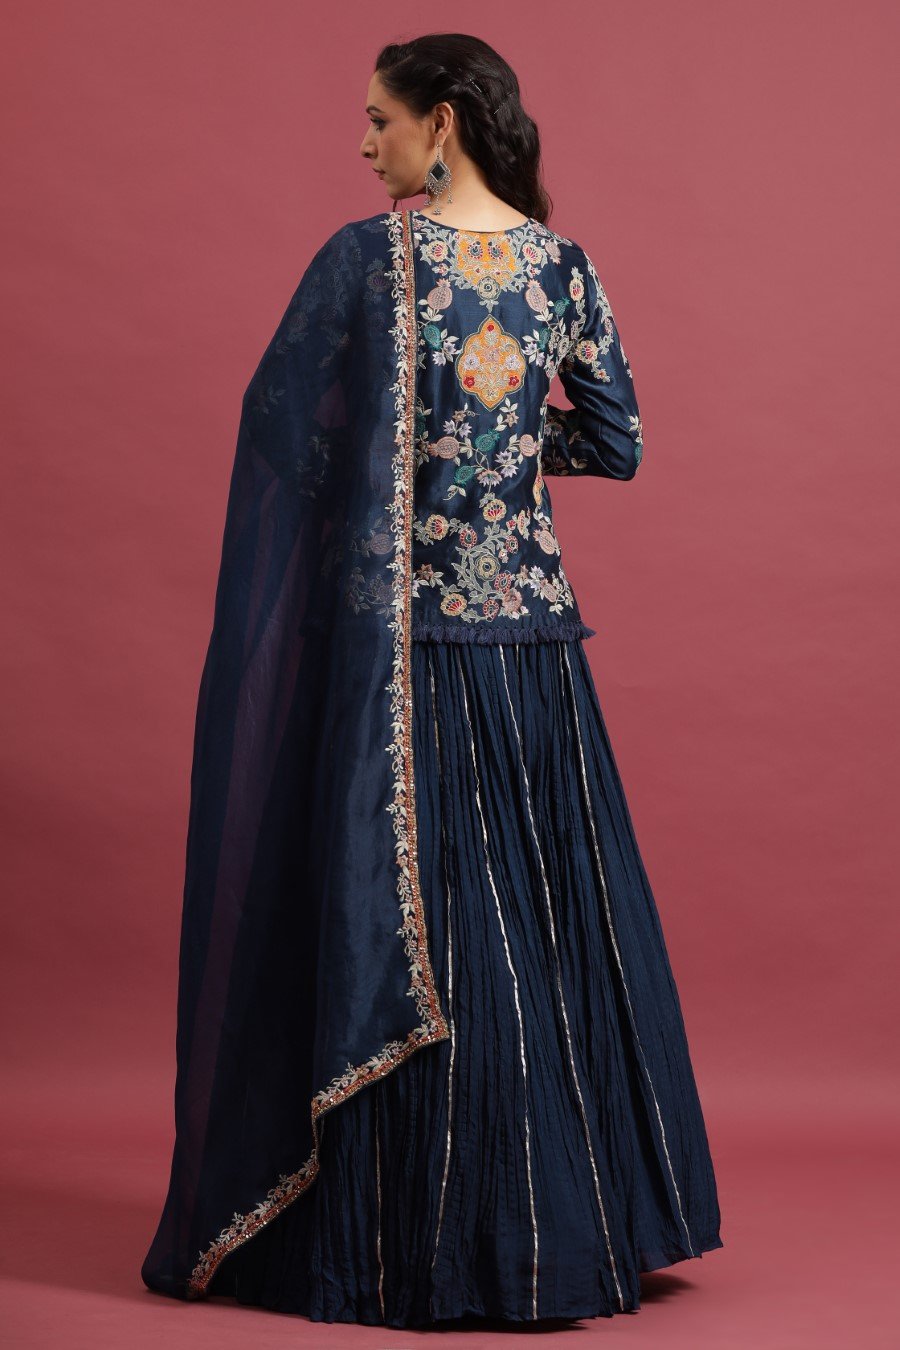 Persian Blue Embroidered Lehenga Choli with Dpatta